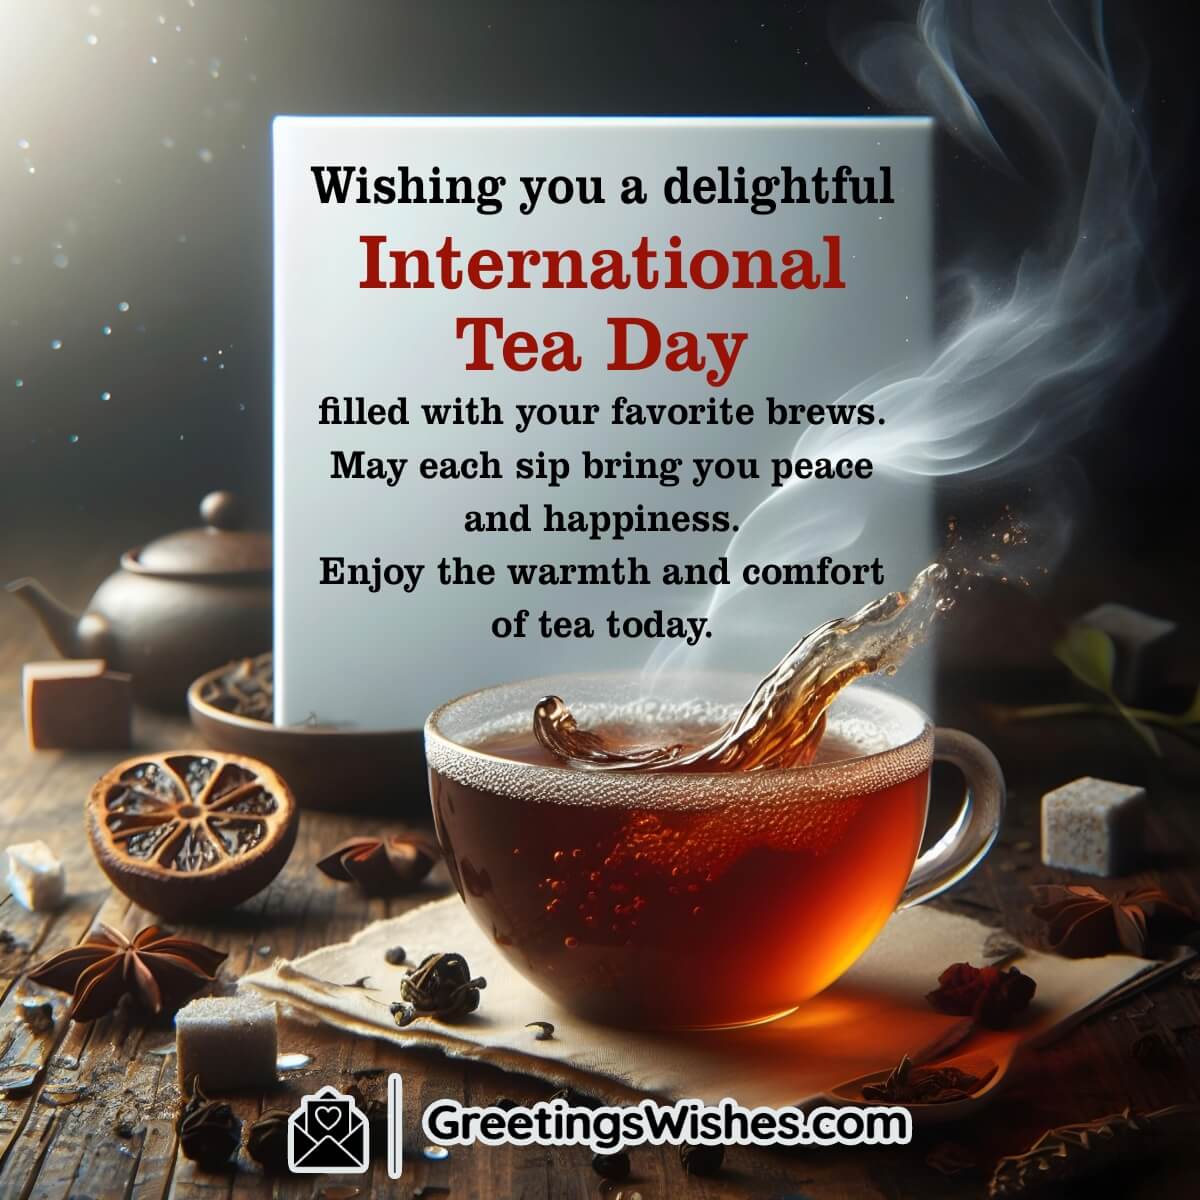 Wishing Delightful International Tea Day